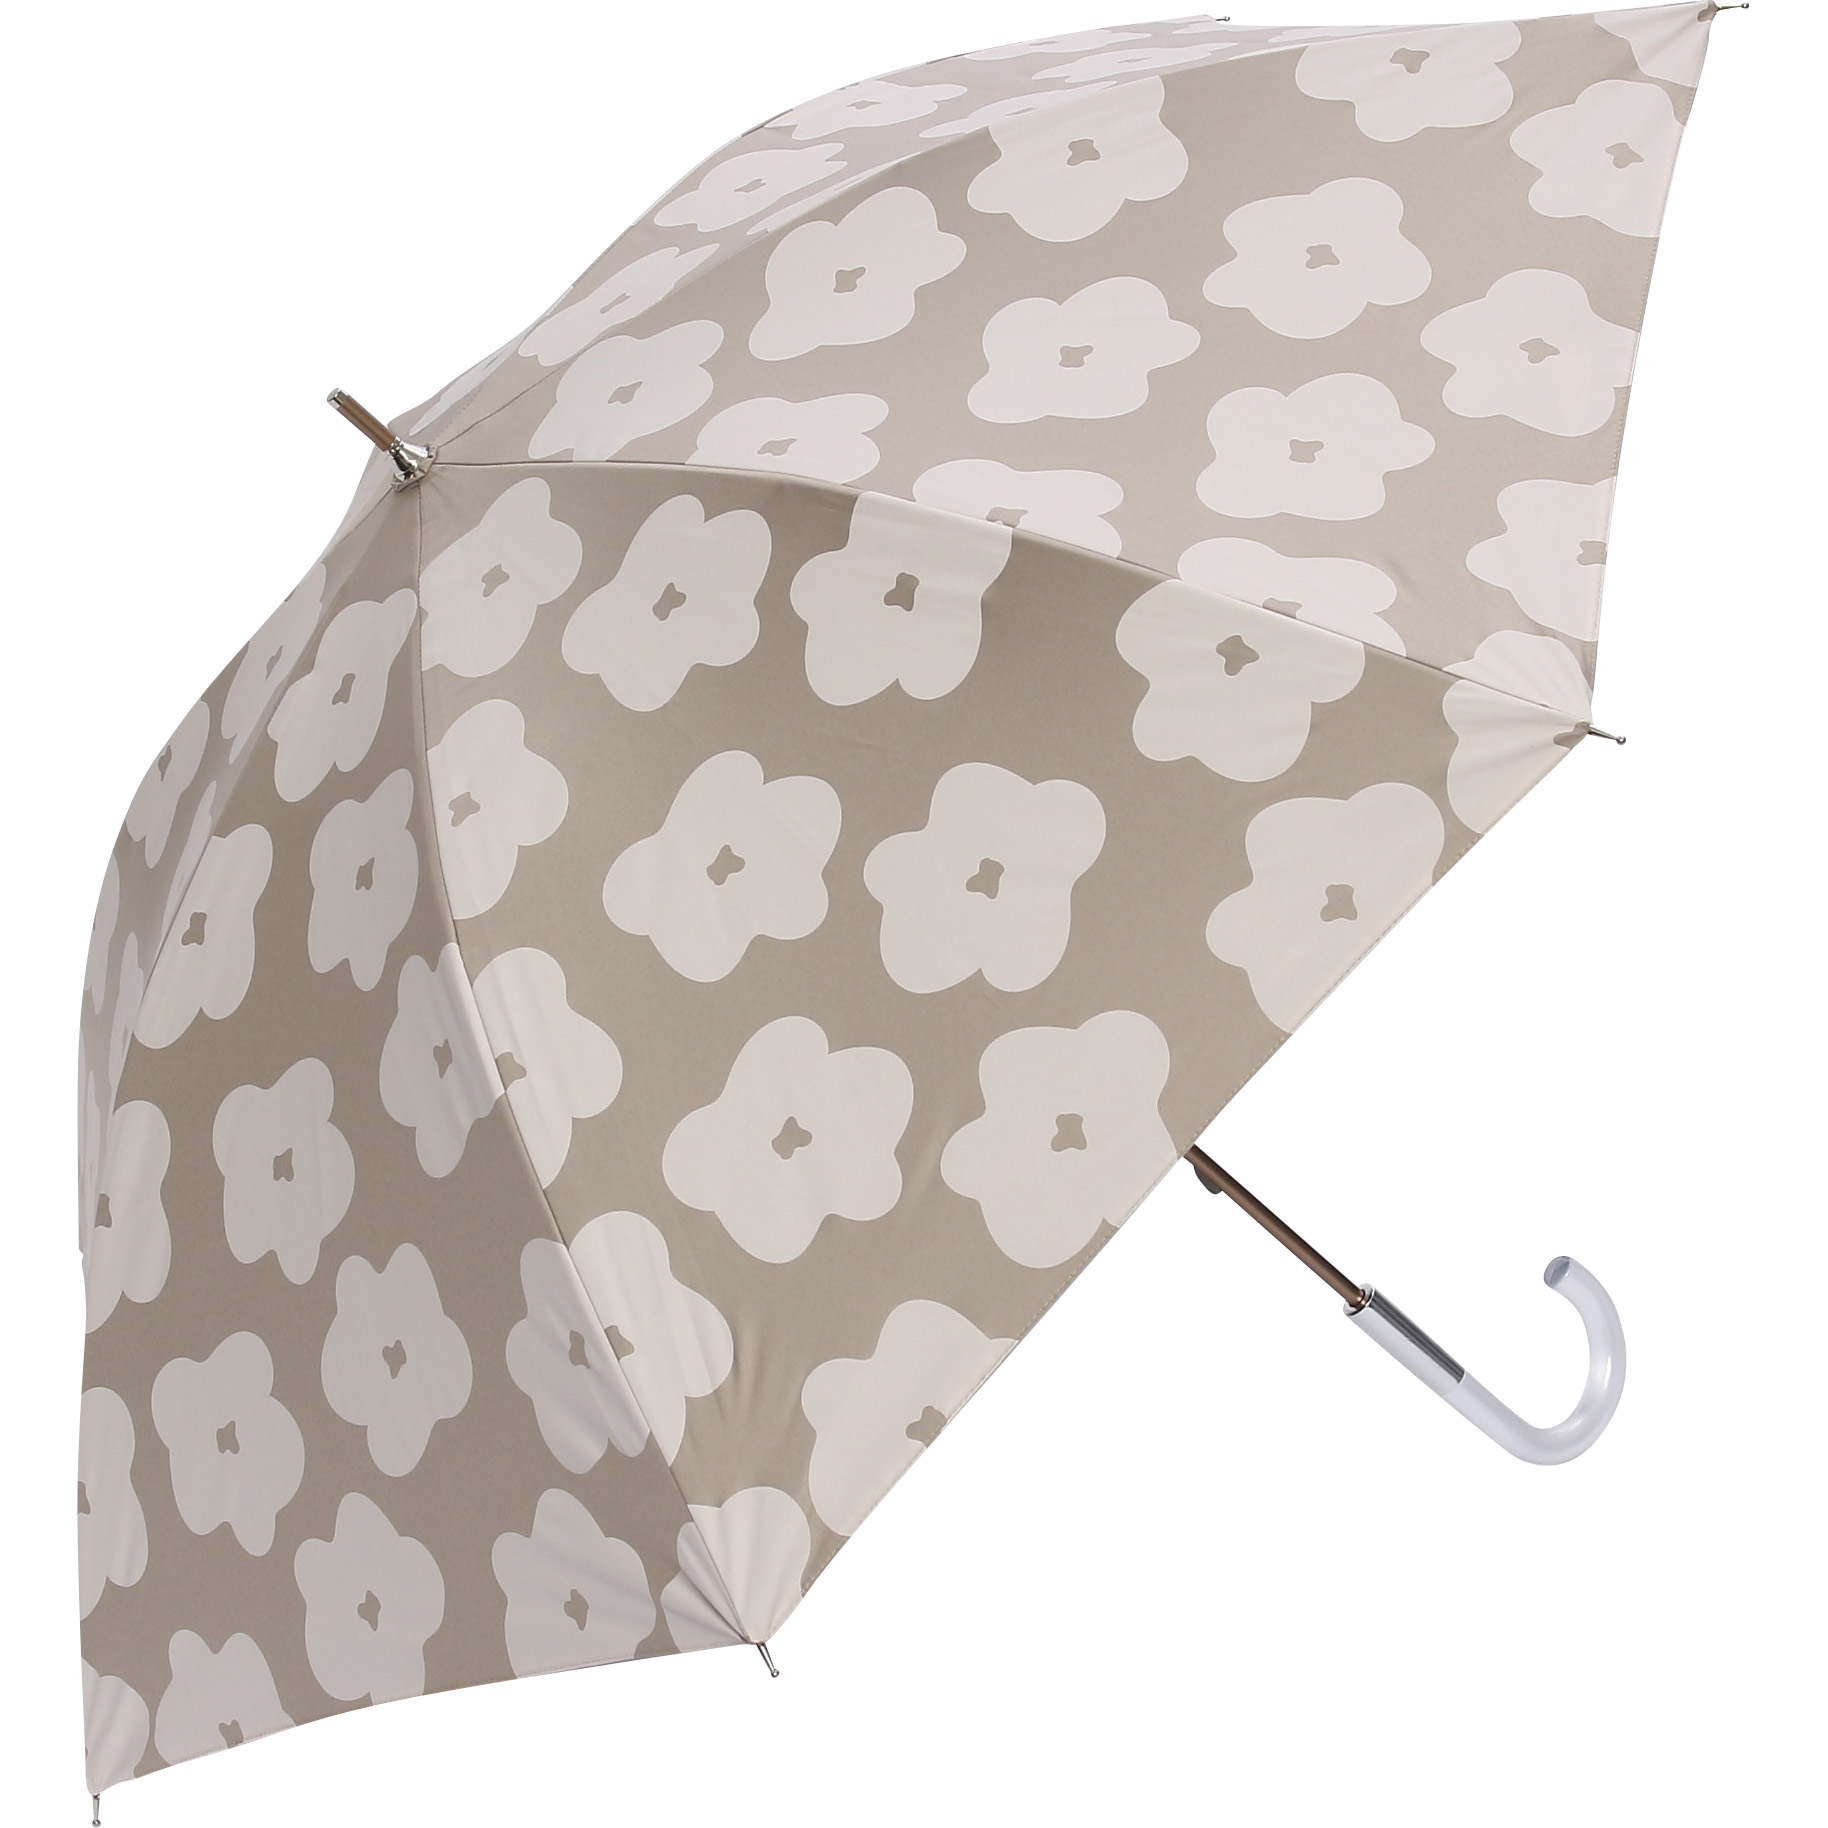 a.s.s.a 公式 日傘 完全遮光 レディース 傘 晴雨兼用 紫外線遮蔽 遮光 55cm ブランド...